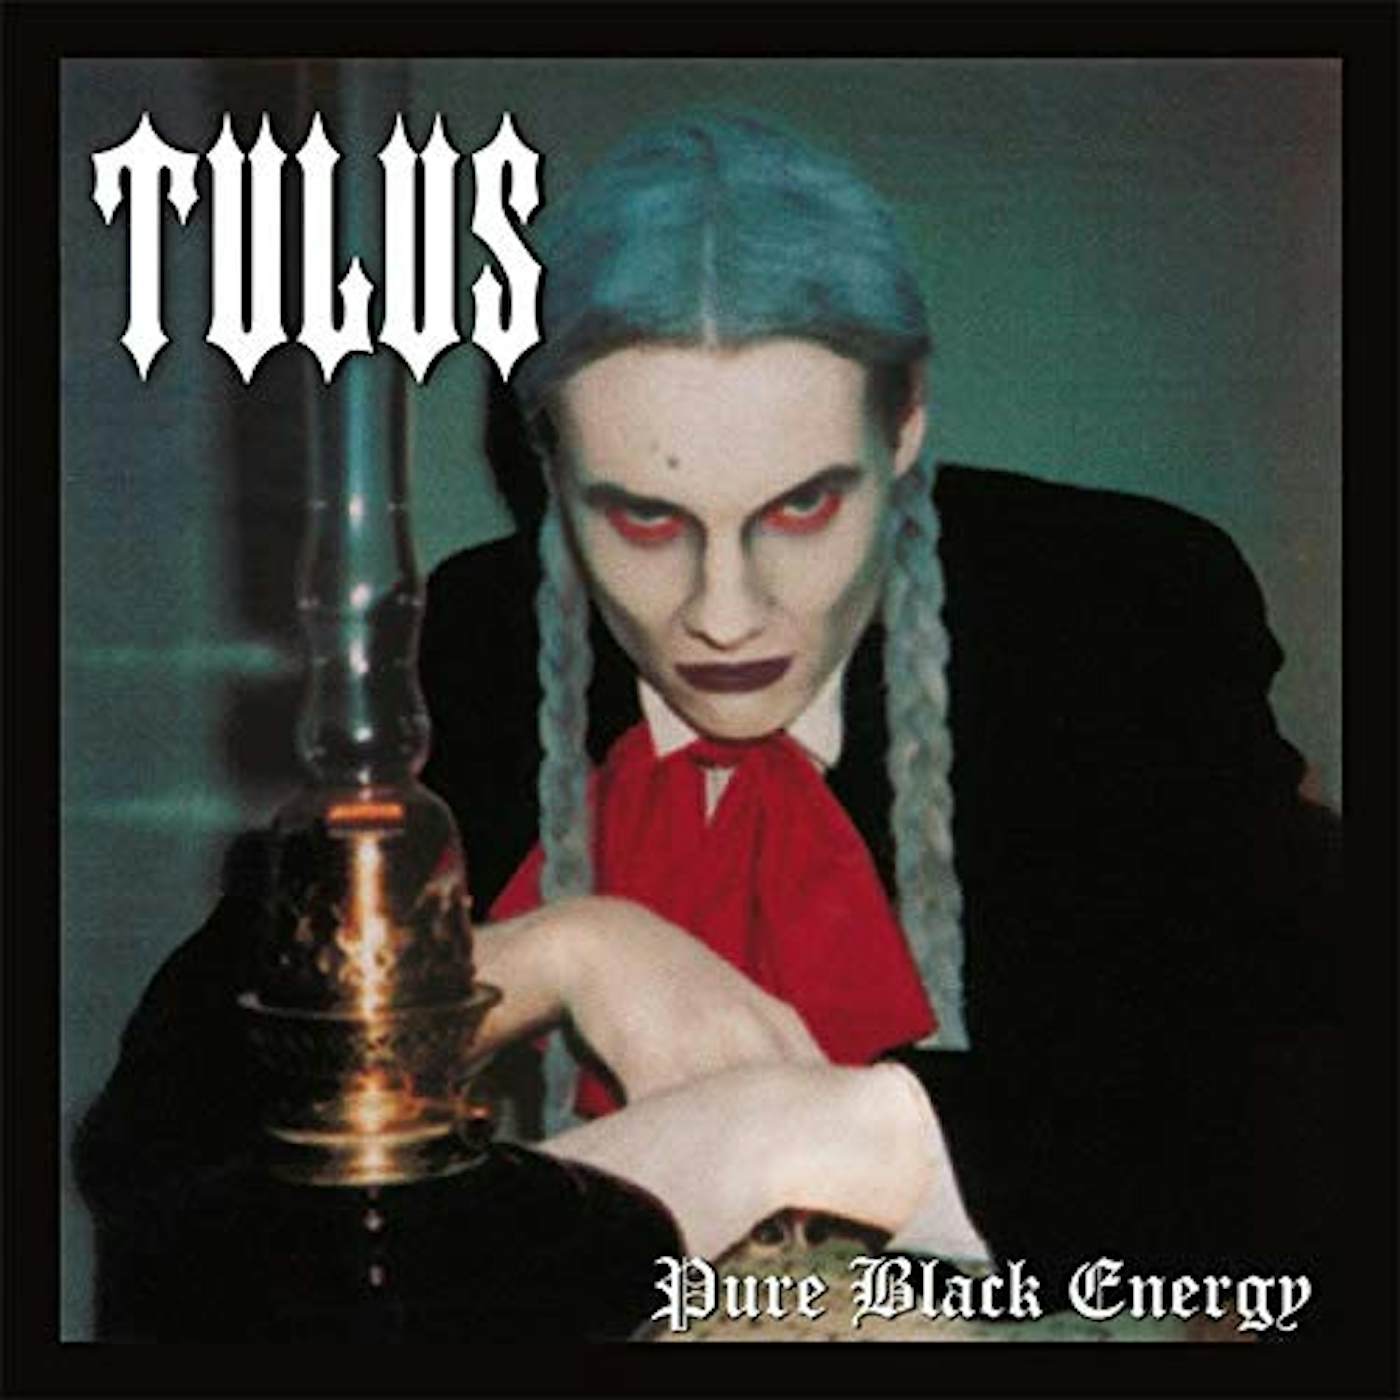 Tulus Pure Black Energy Vinyl Record